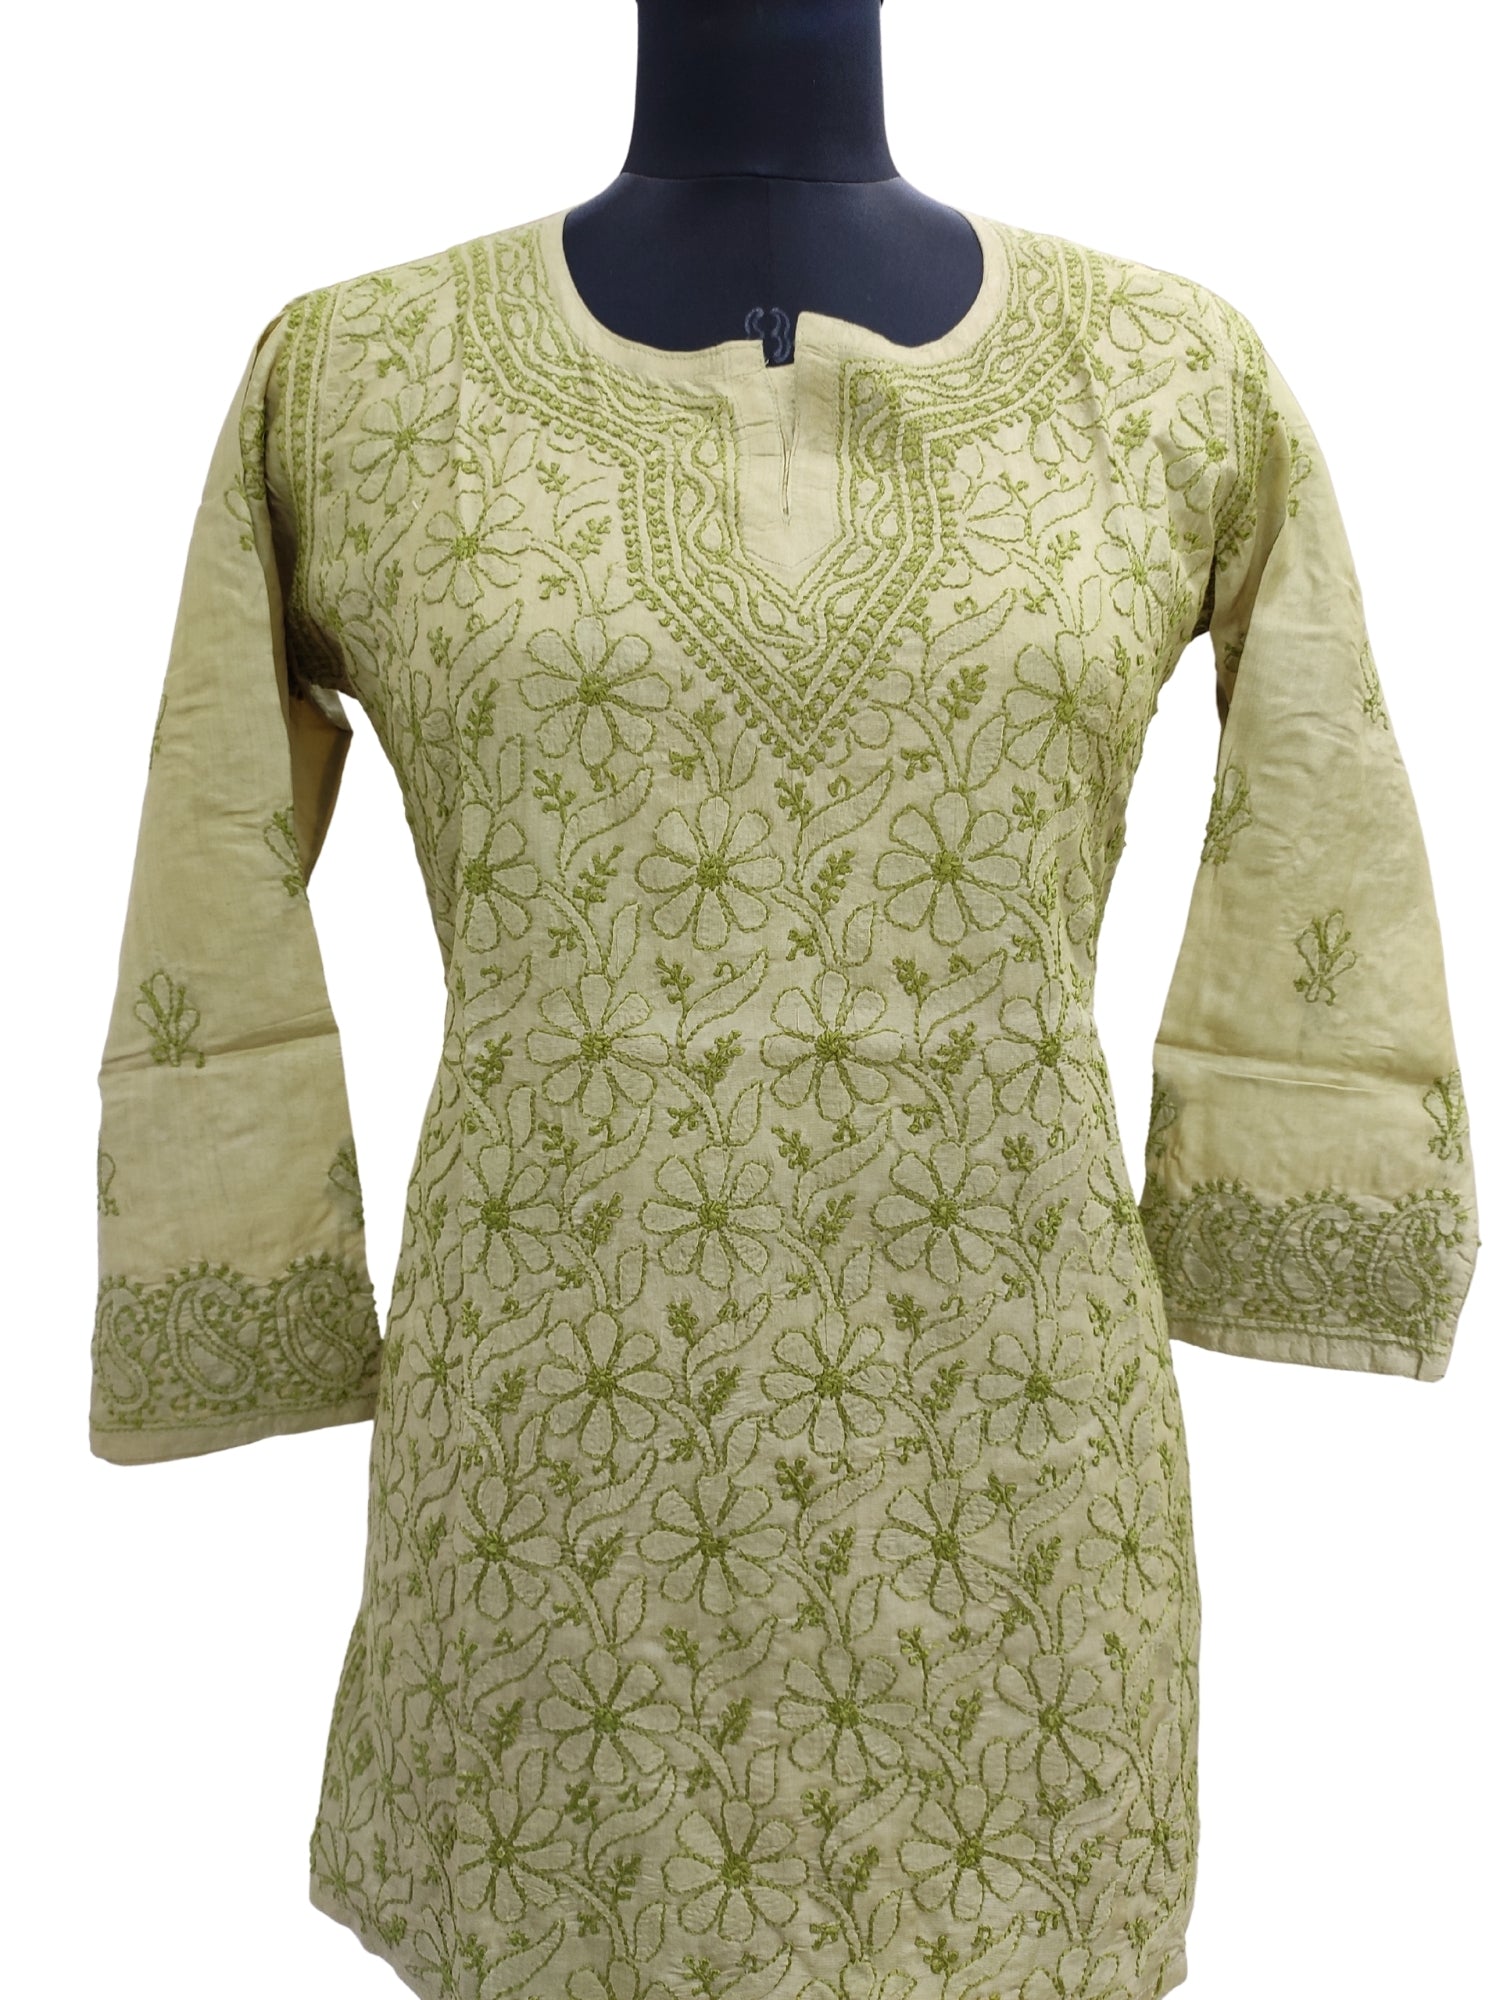 hyamal Chikan Hand Embroidered Green Pure Tusser Silk Lucknowi Chikankari Short Top- S507